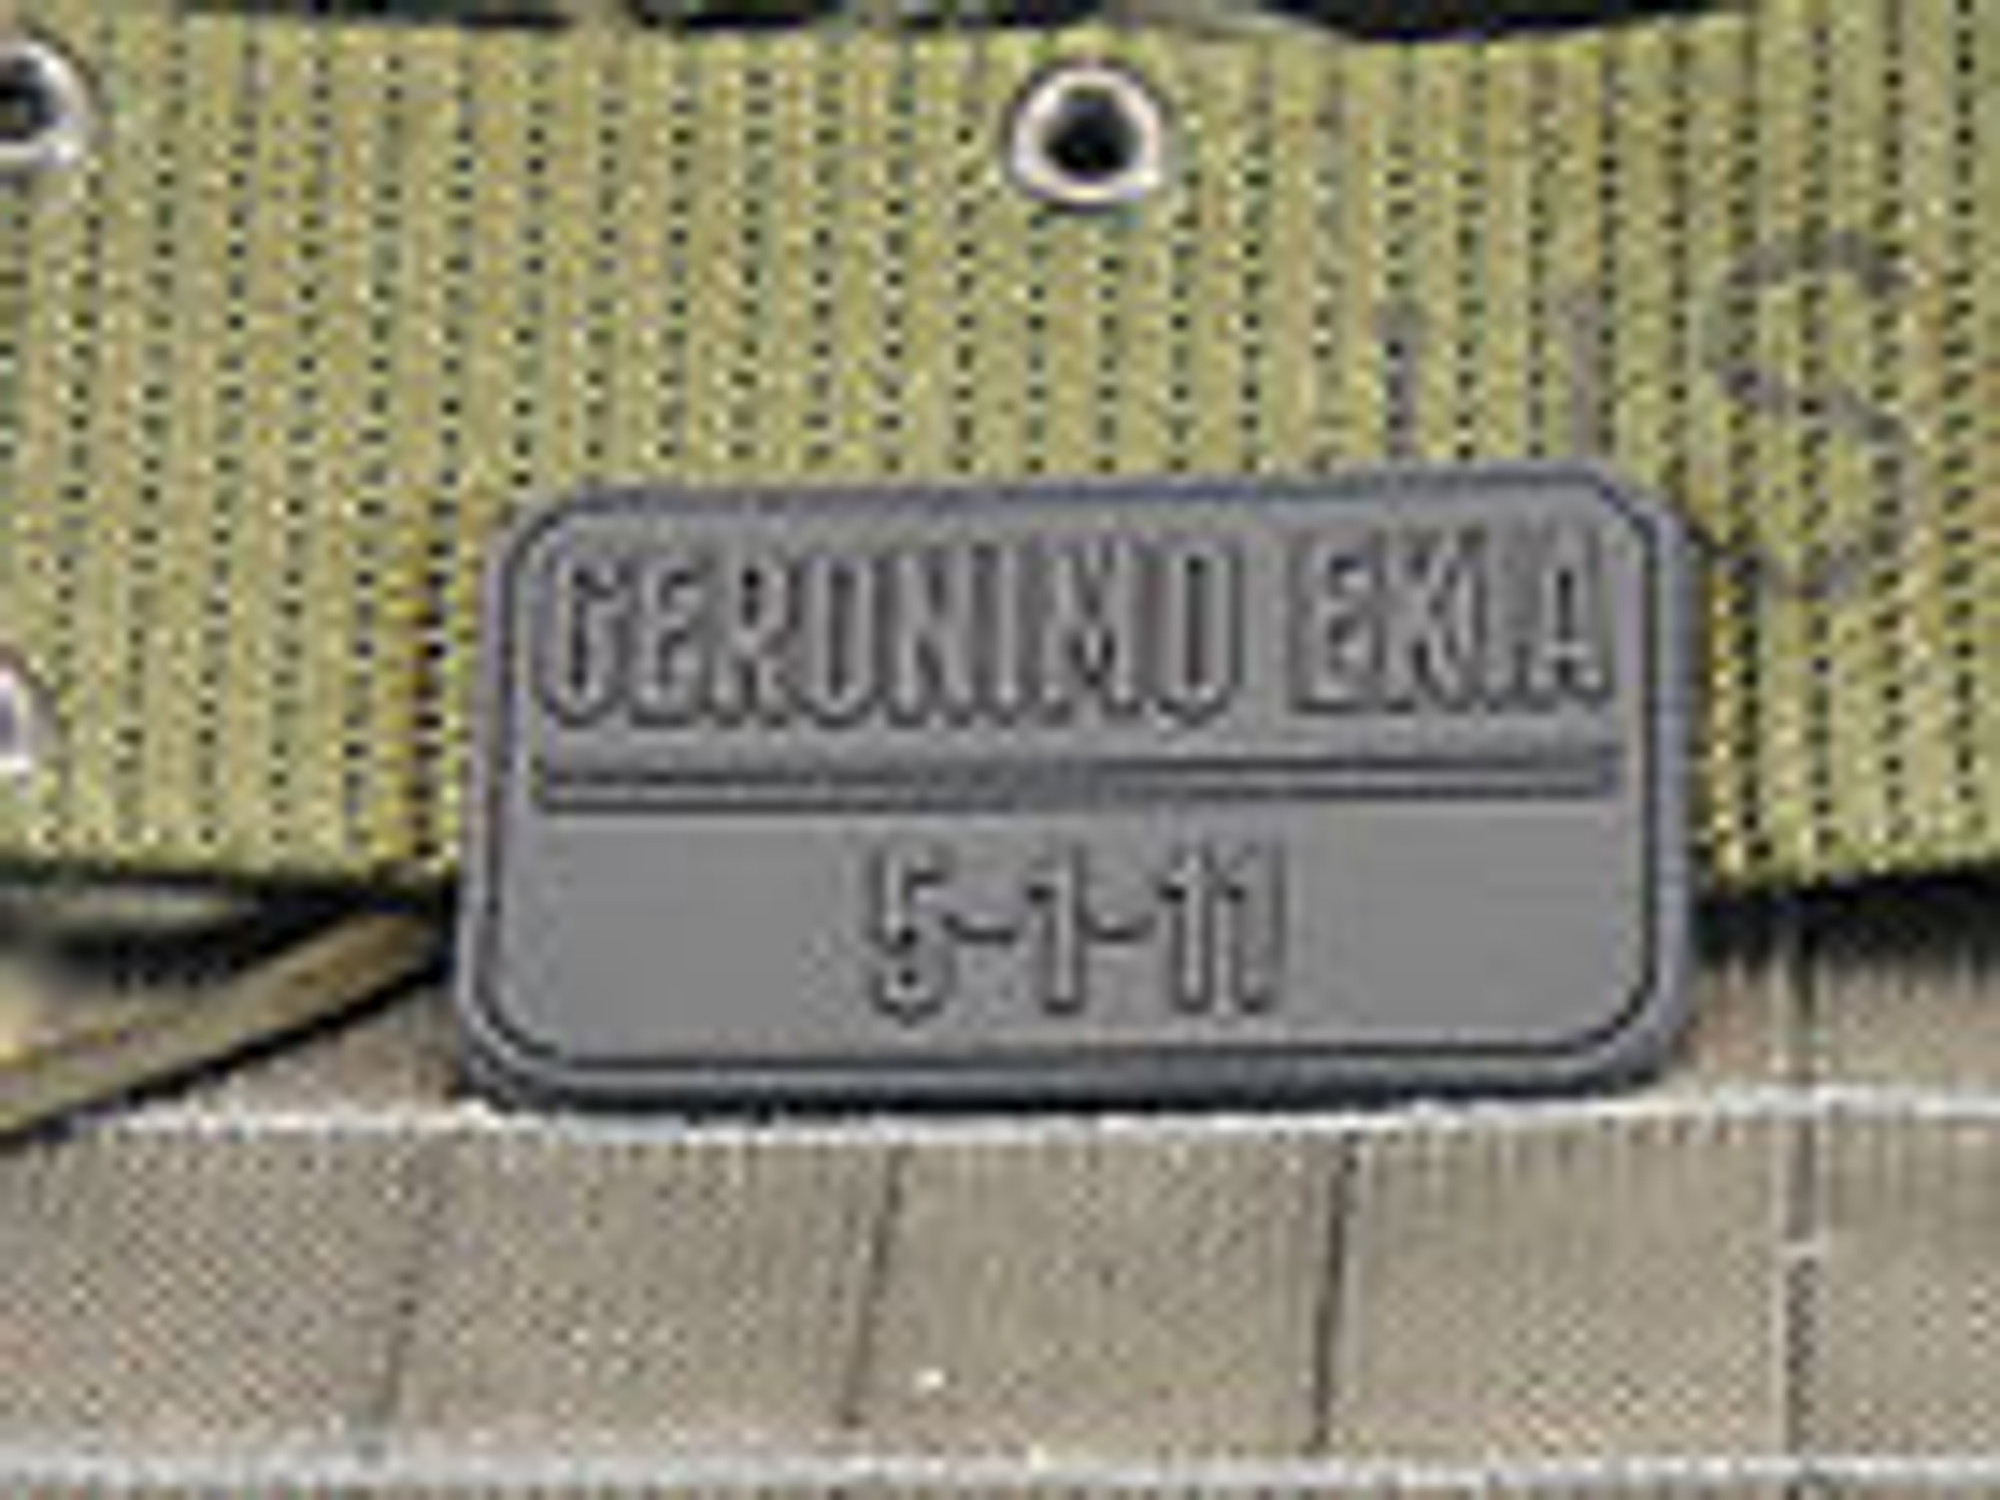 Geronimo Ekia 5-11-11 - Black - Morale Patch